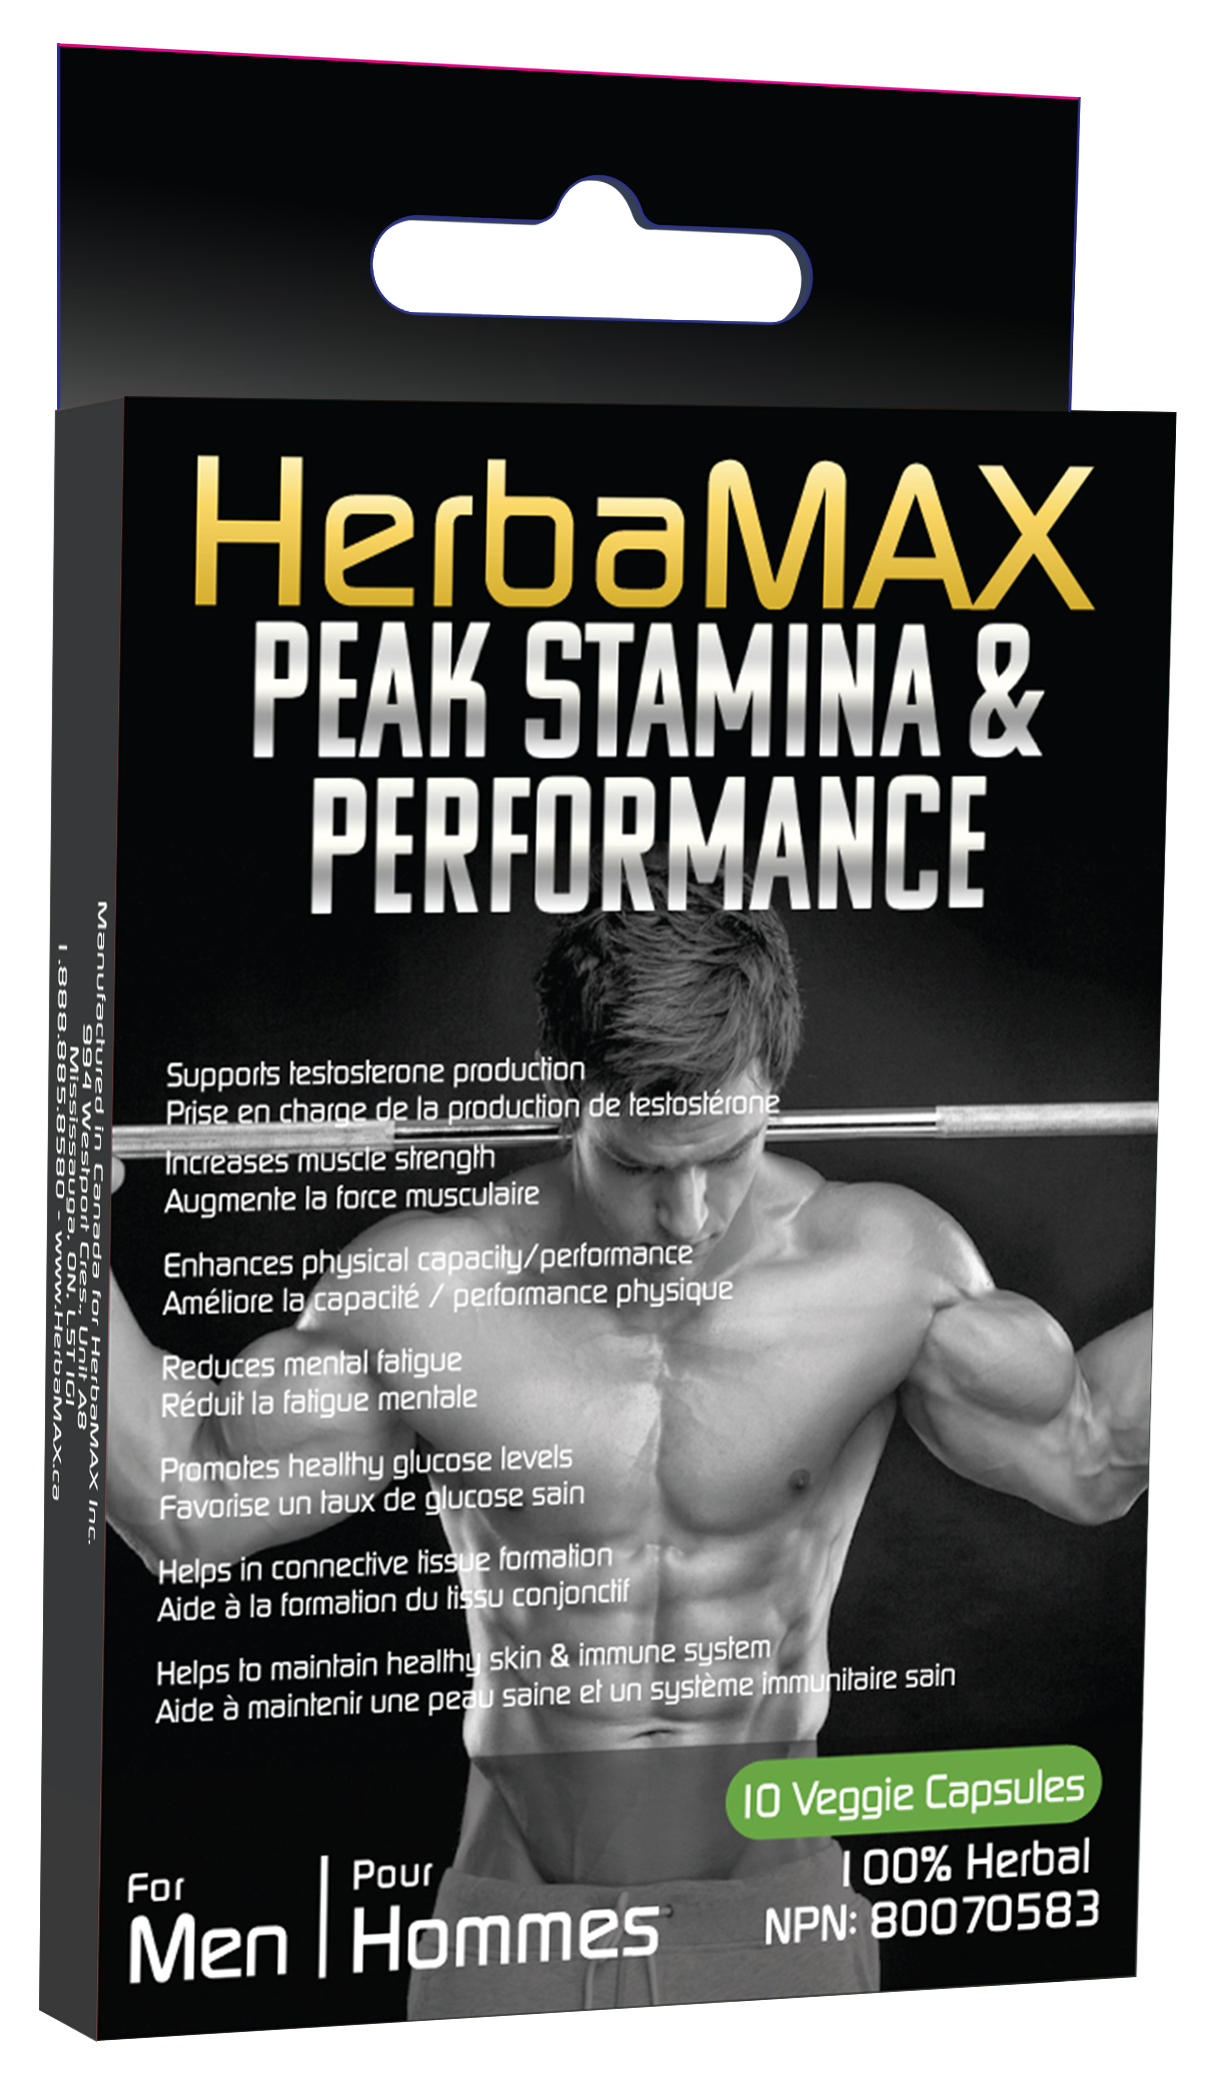 HerbaMAX Peak Stamina & Performance for men 10 capsules